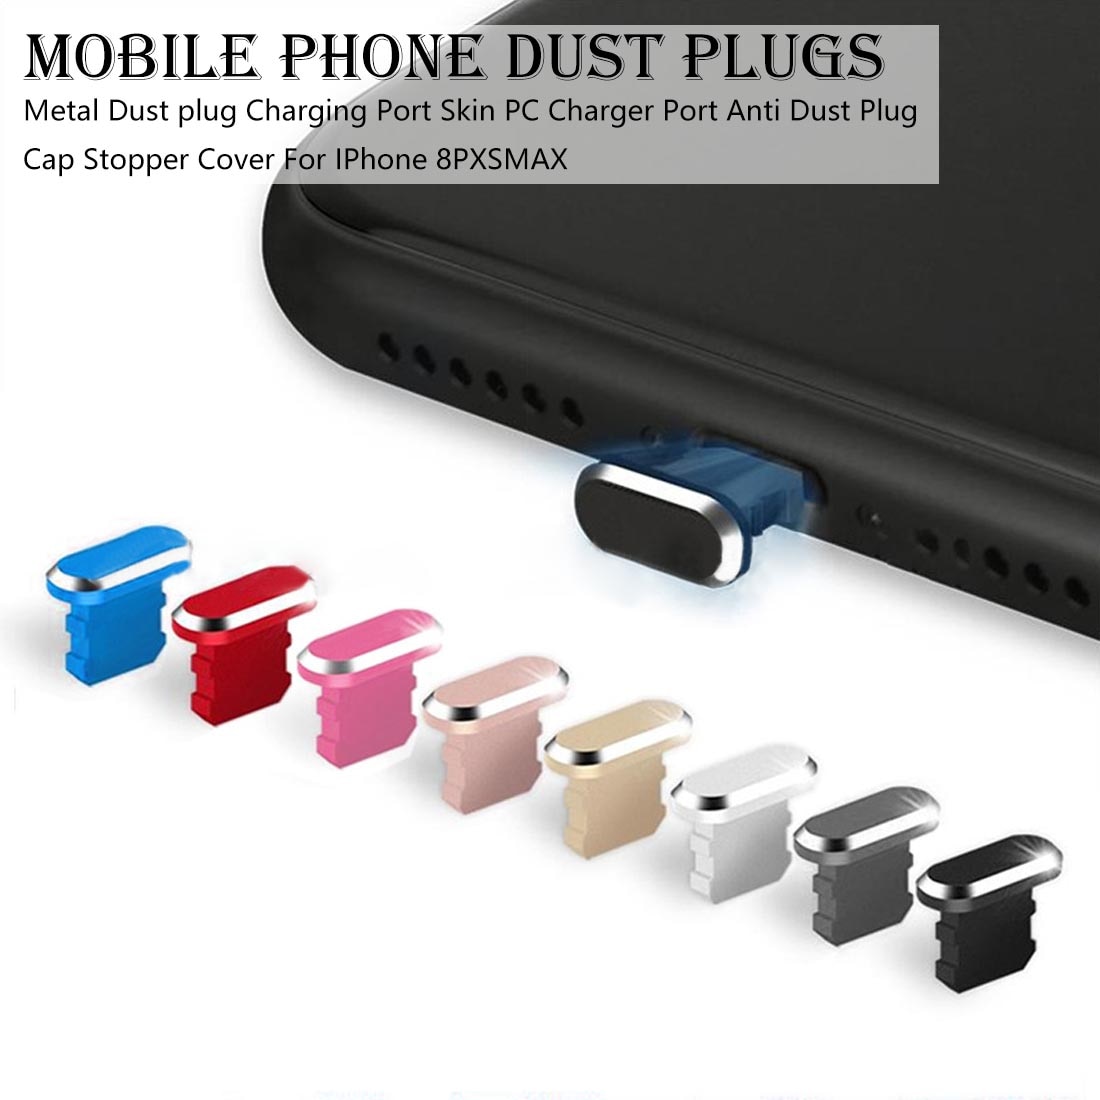 Metalen Stof Plug Poort Opladen Skin Pc Charger Port Anti Dust Plug Cap Stopper Voor Iphone 8 Pxsmax Mobiele telefoon Stof Plug